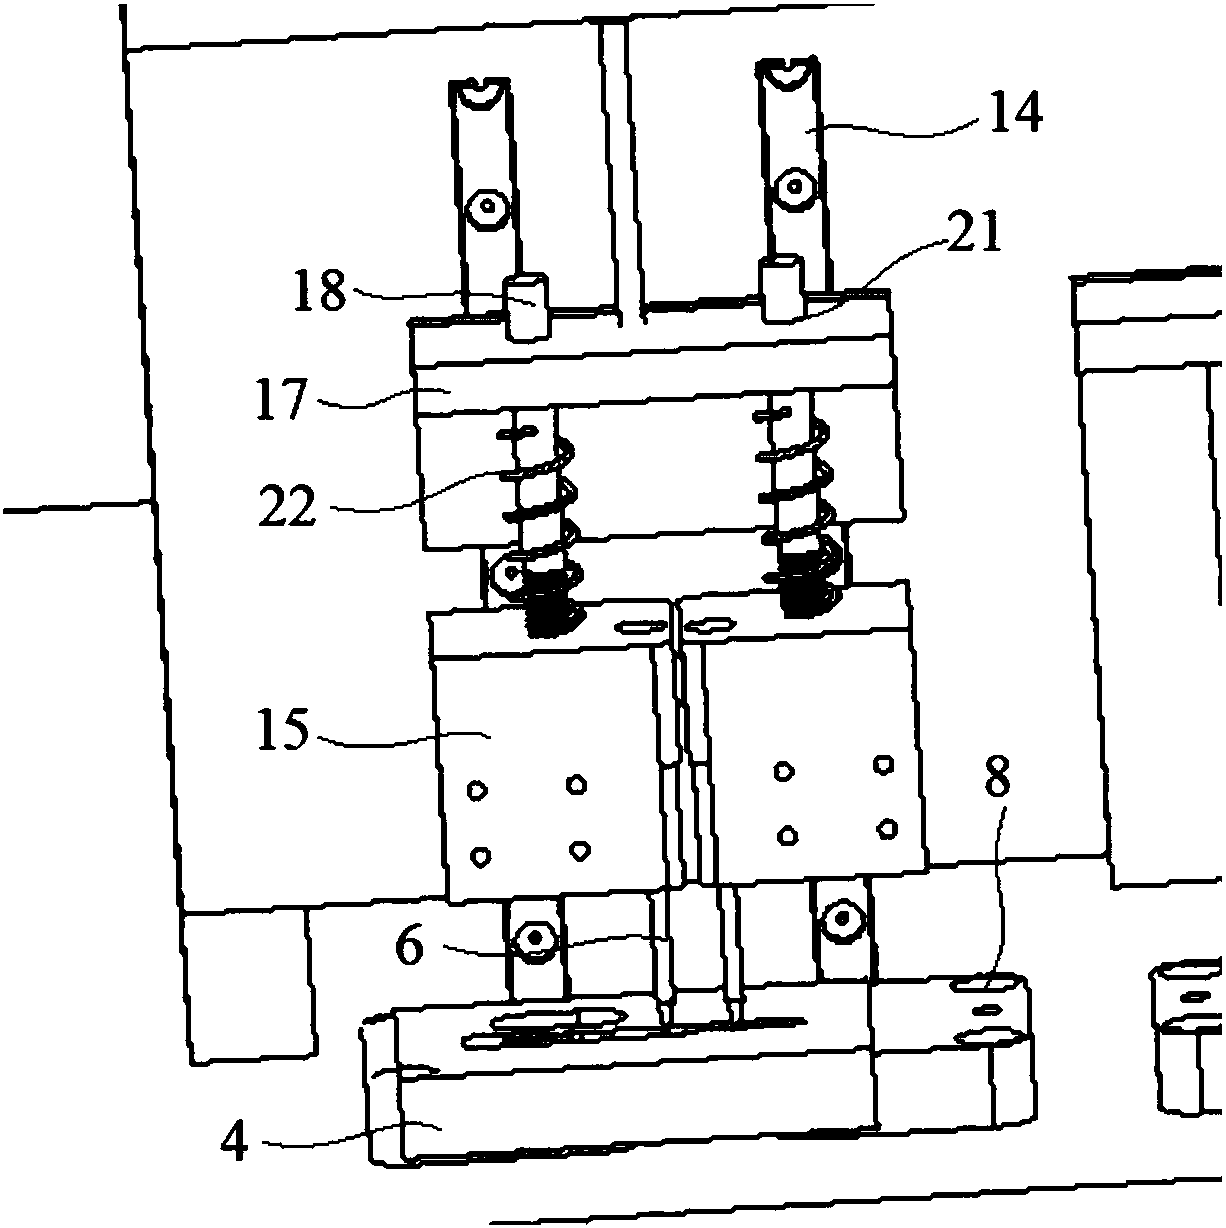 Impedance testing apparatus